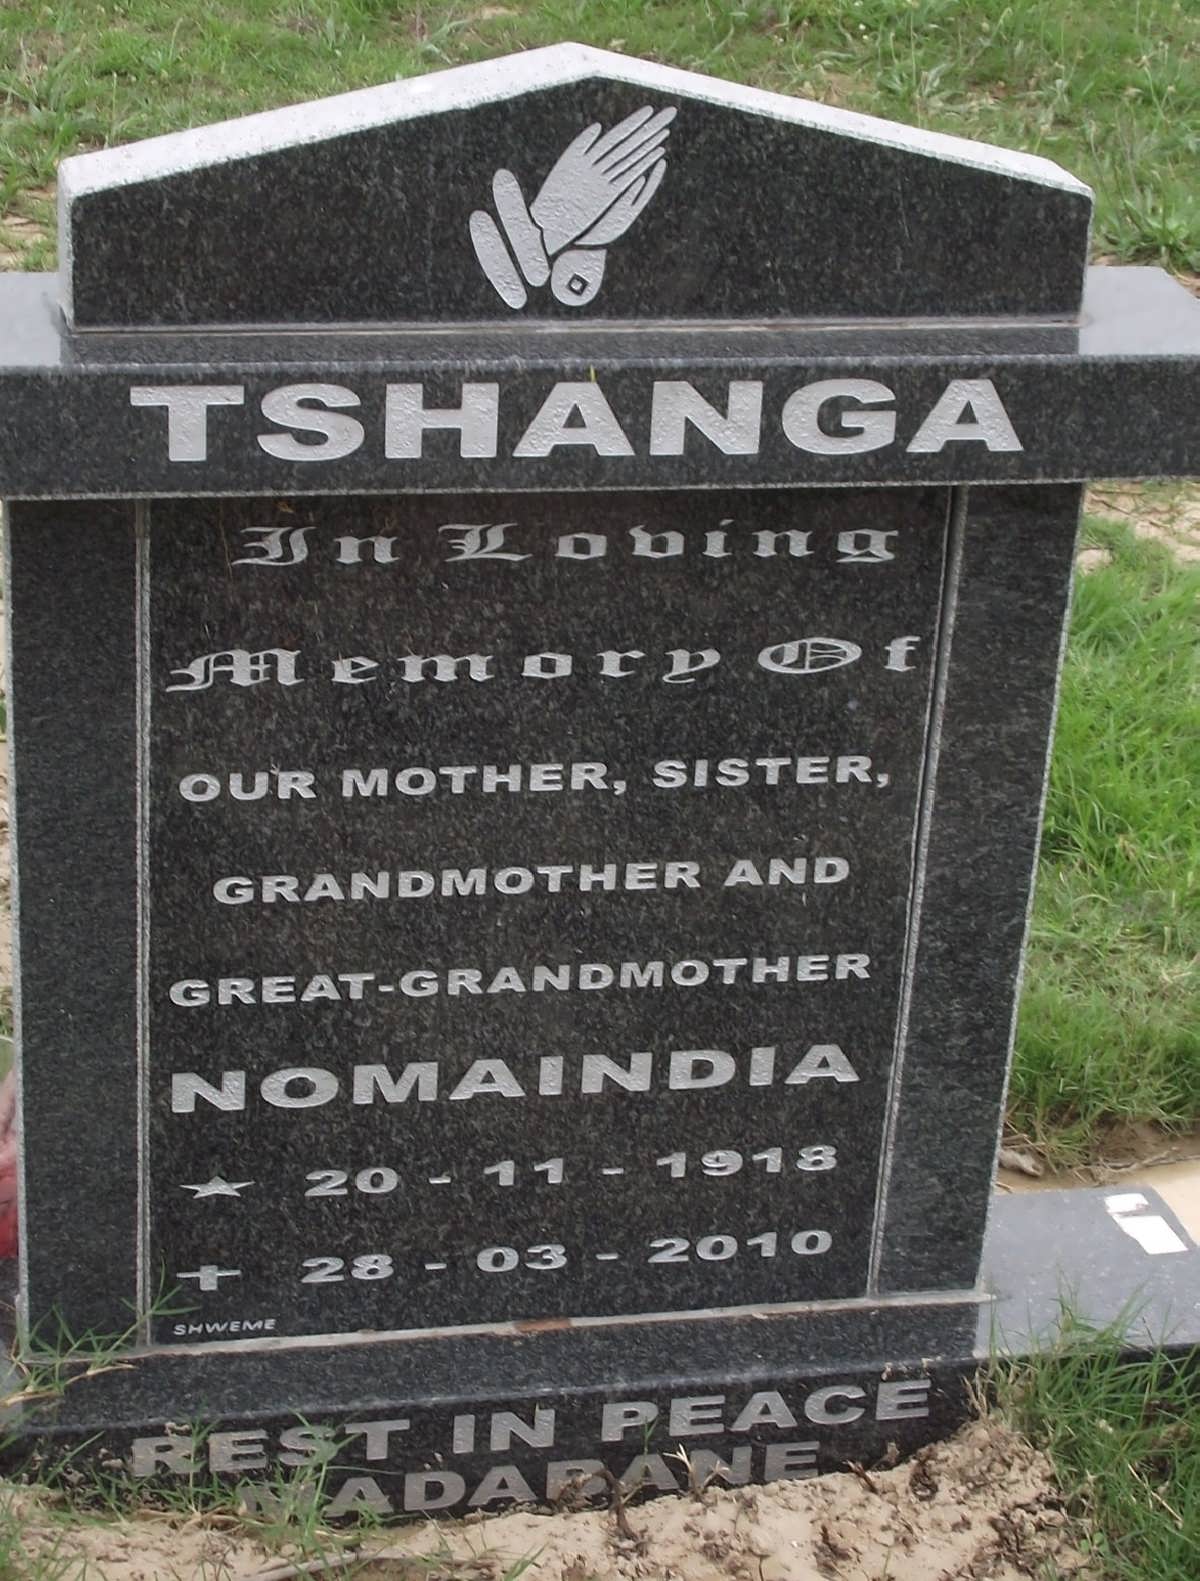 TSHANGA Nomaindia 1918-2010